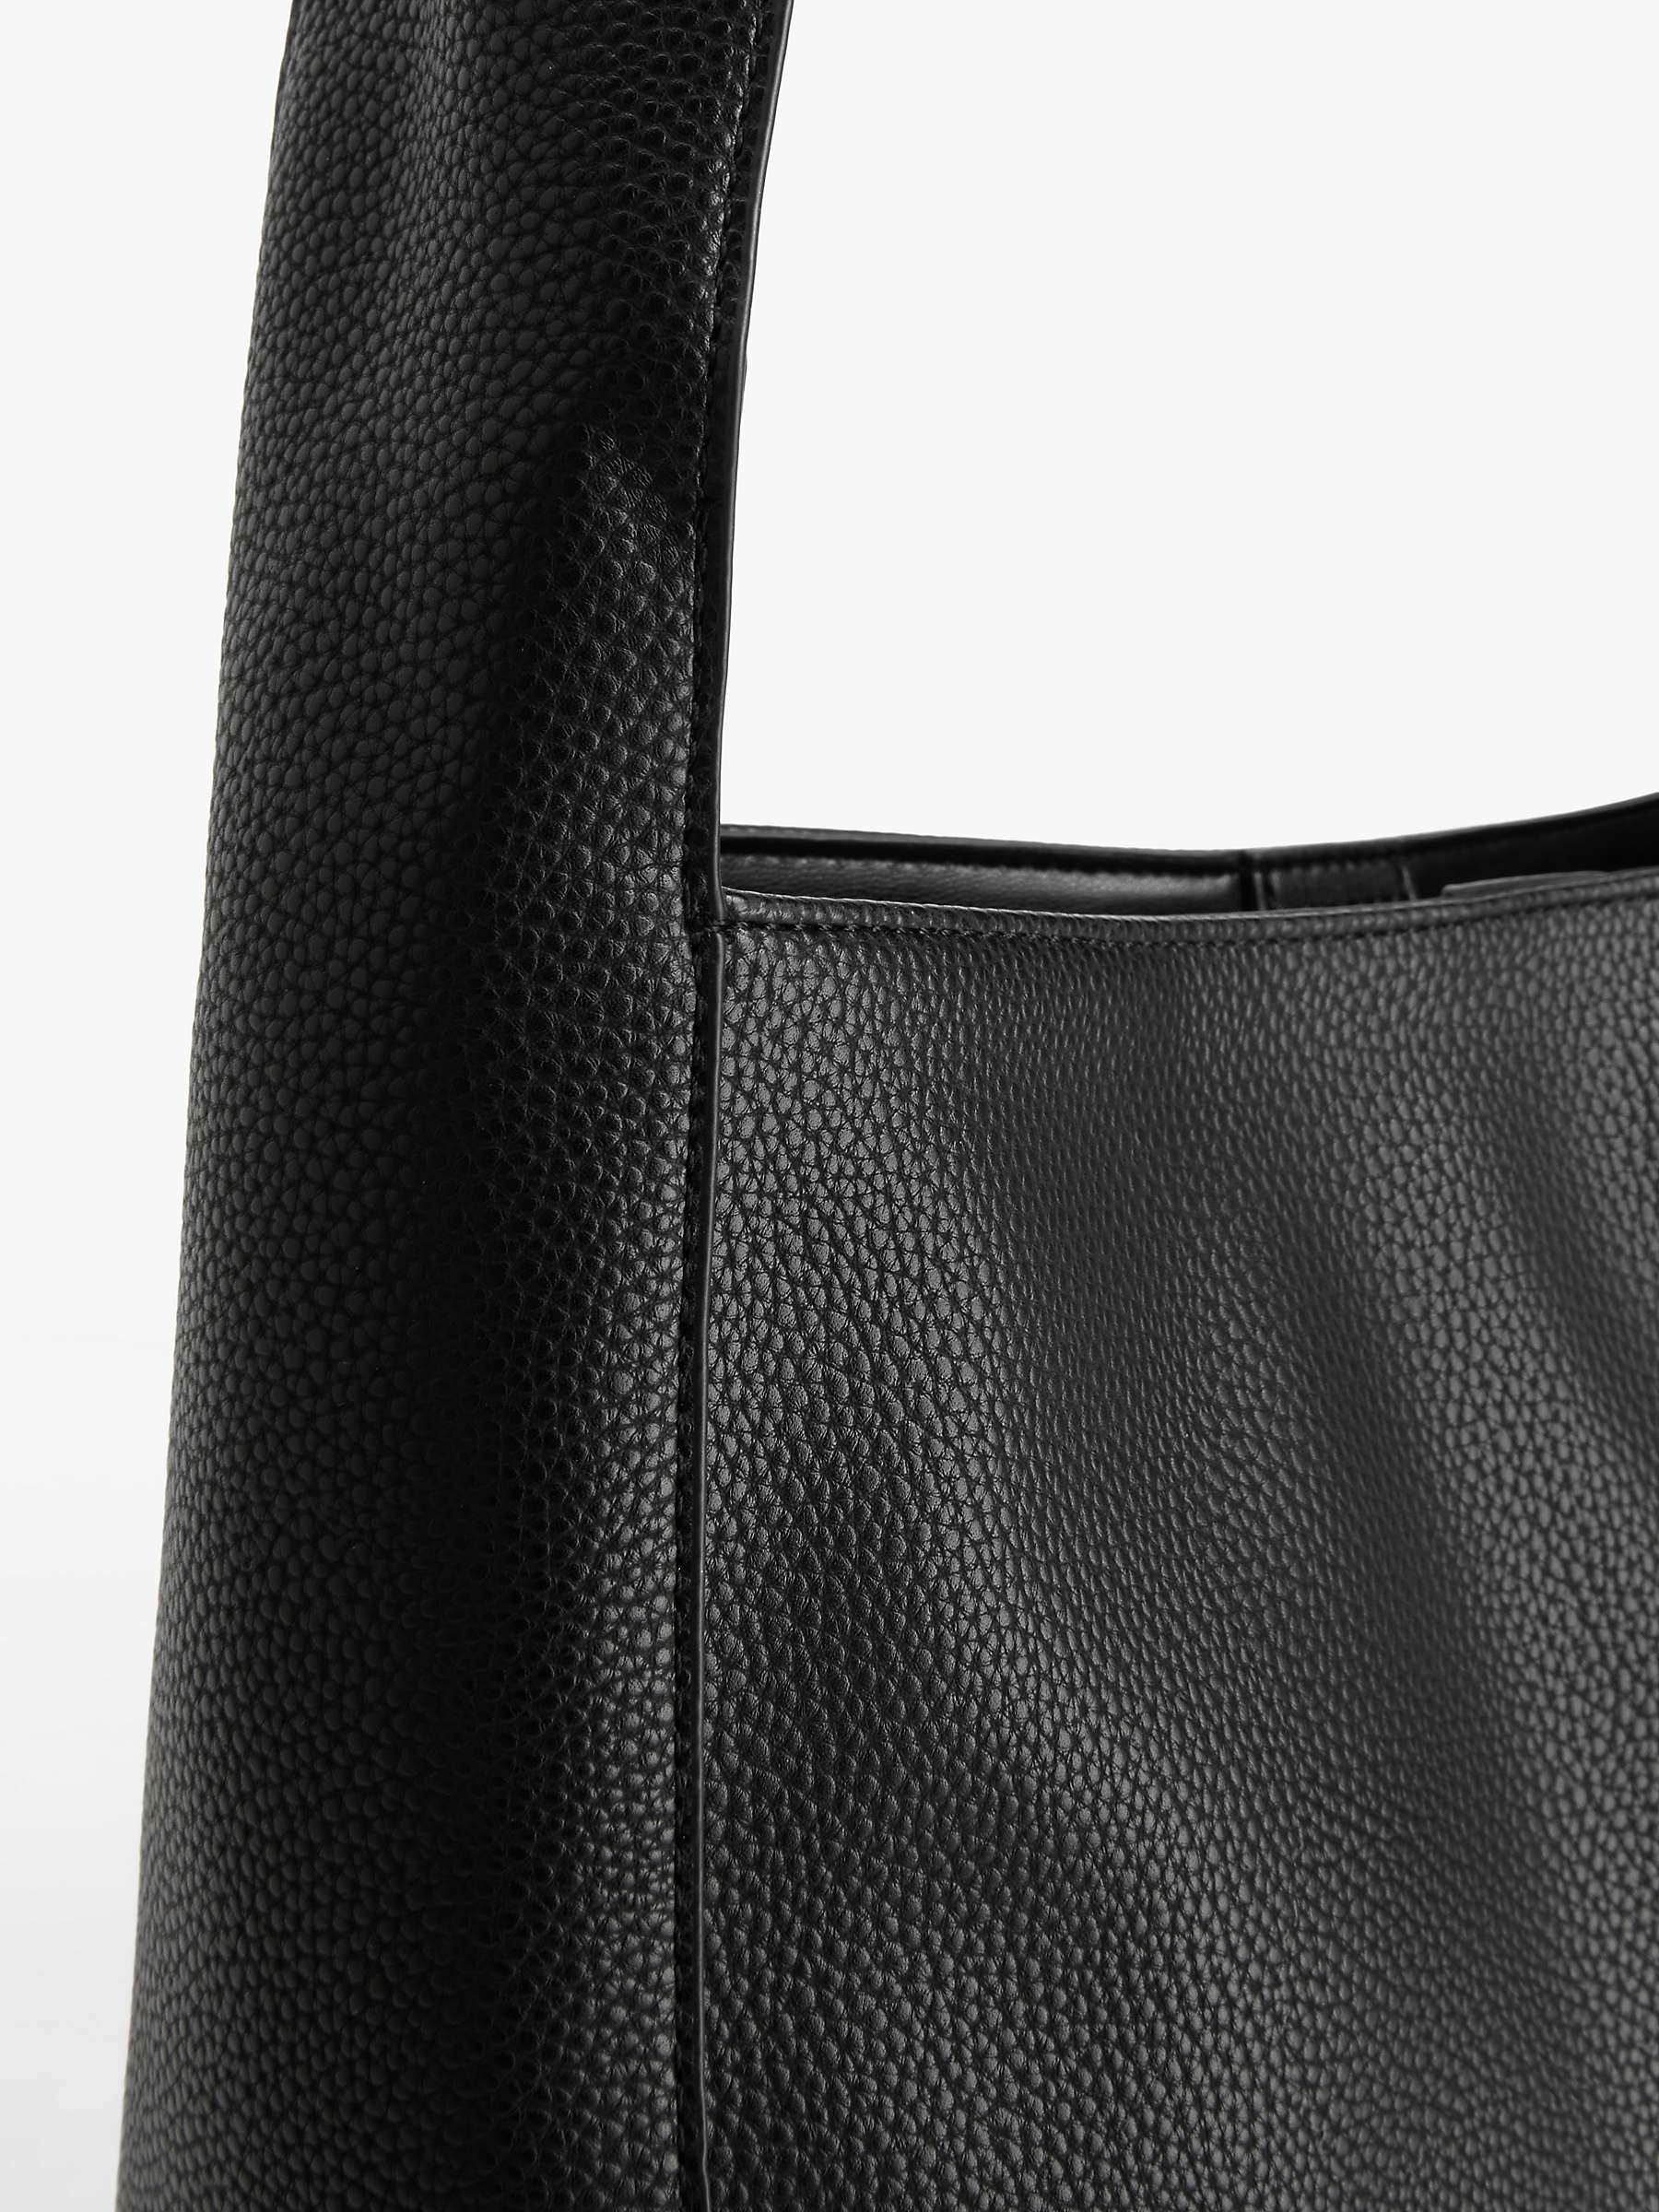 Kin Soft Hobo Bag, Black at John Lewis & Partners